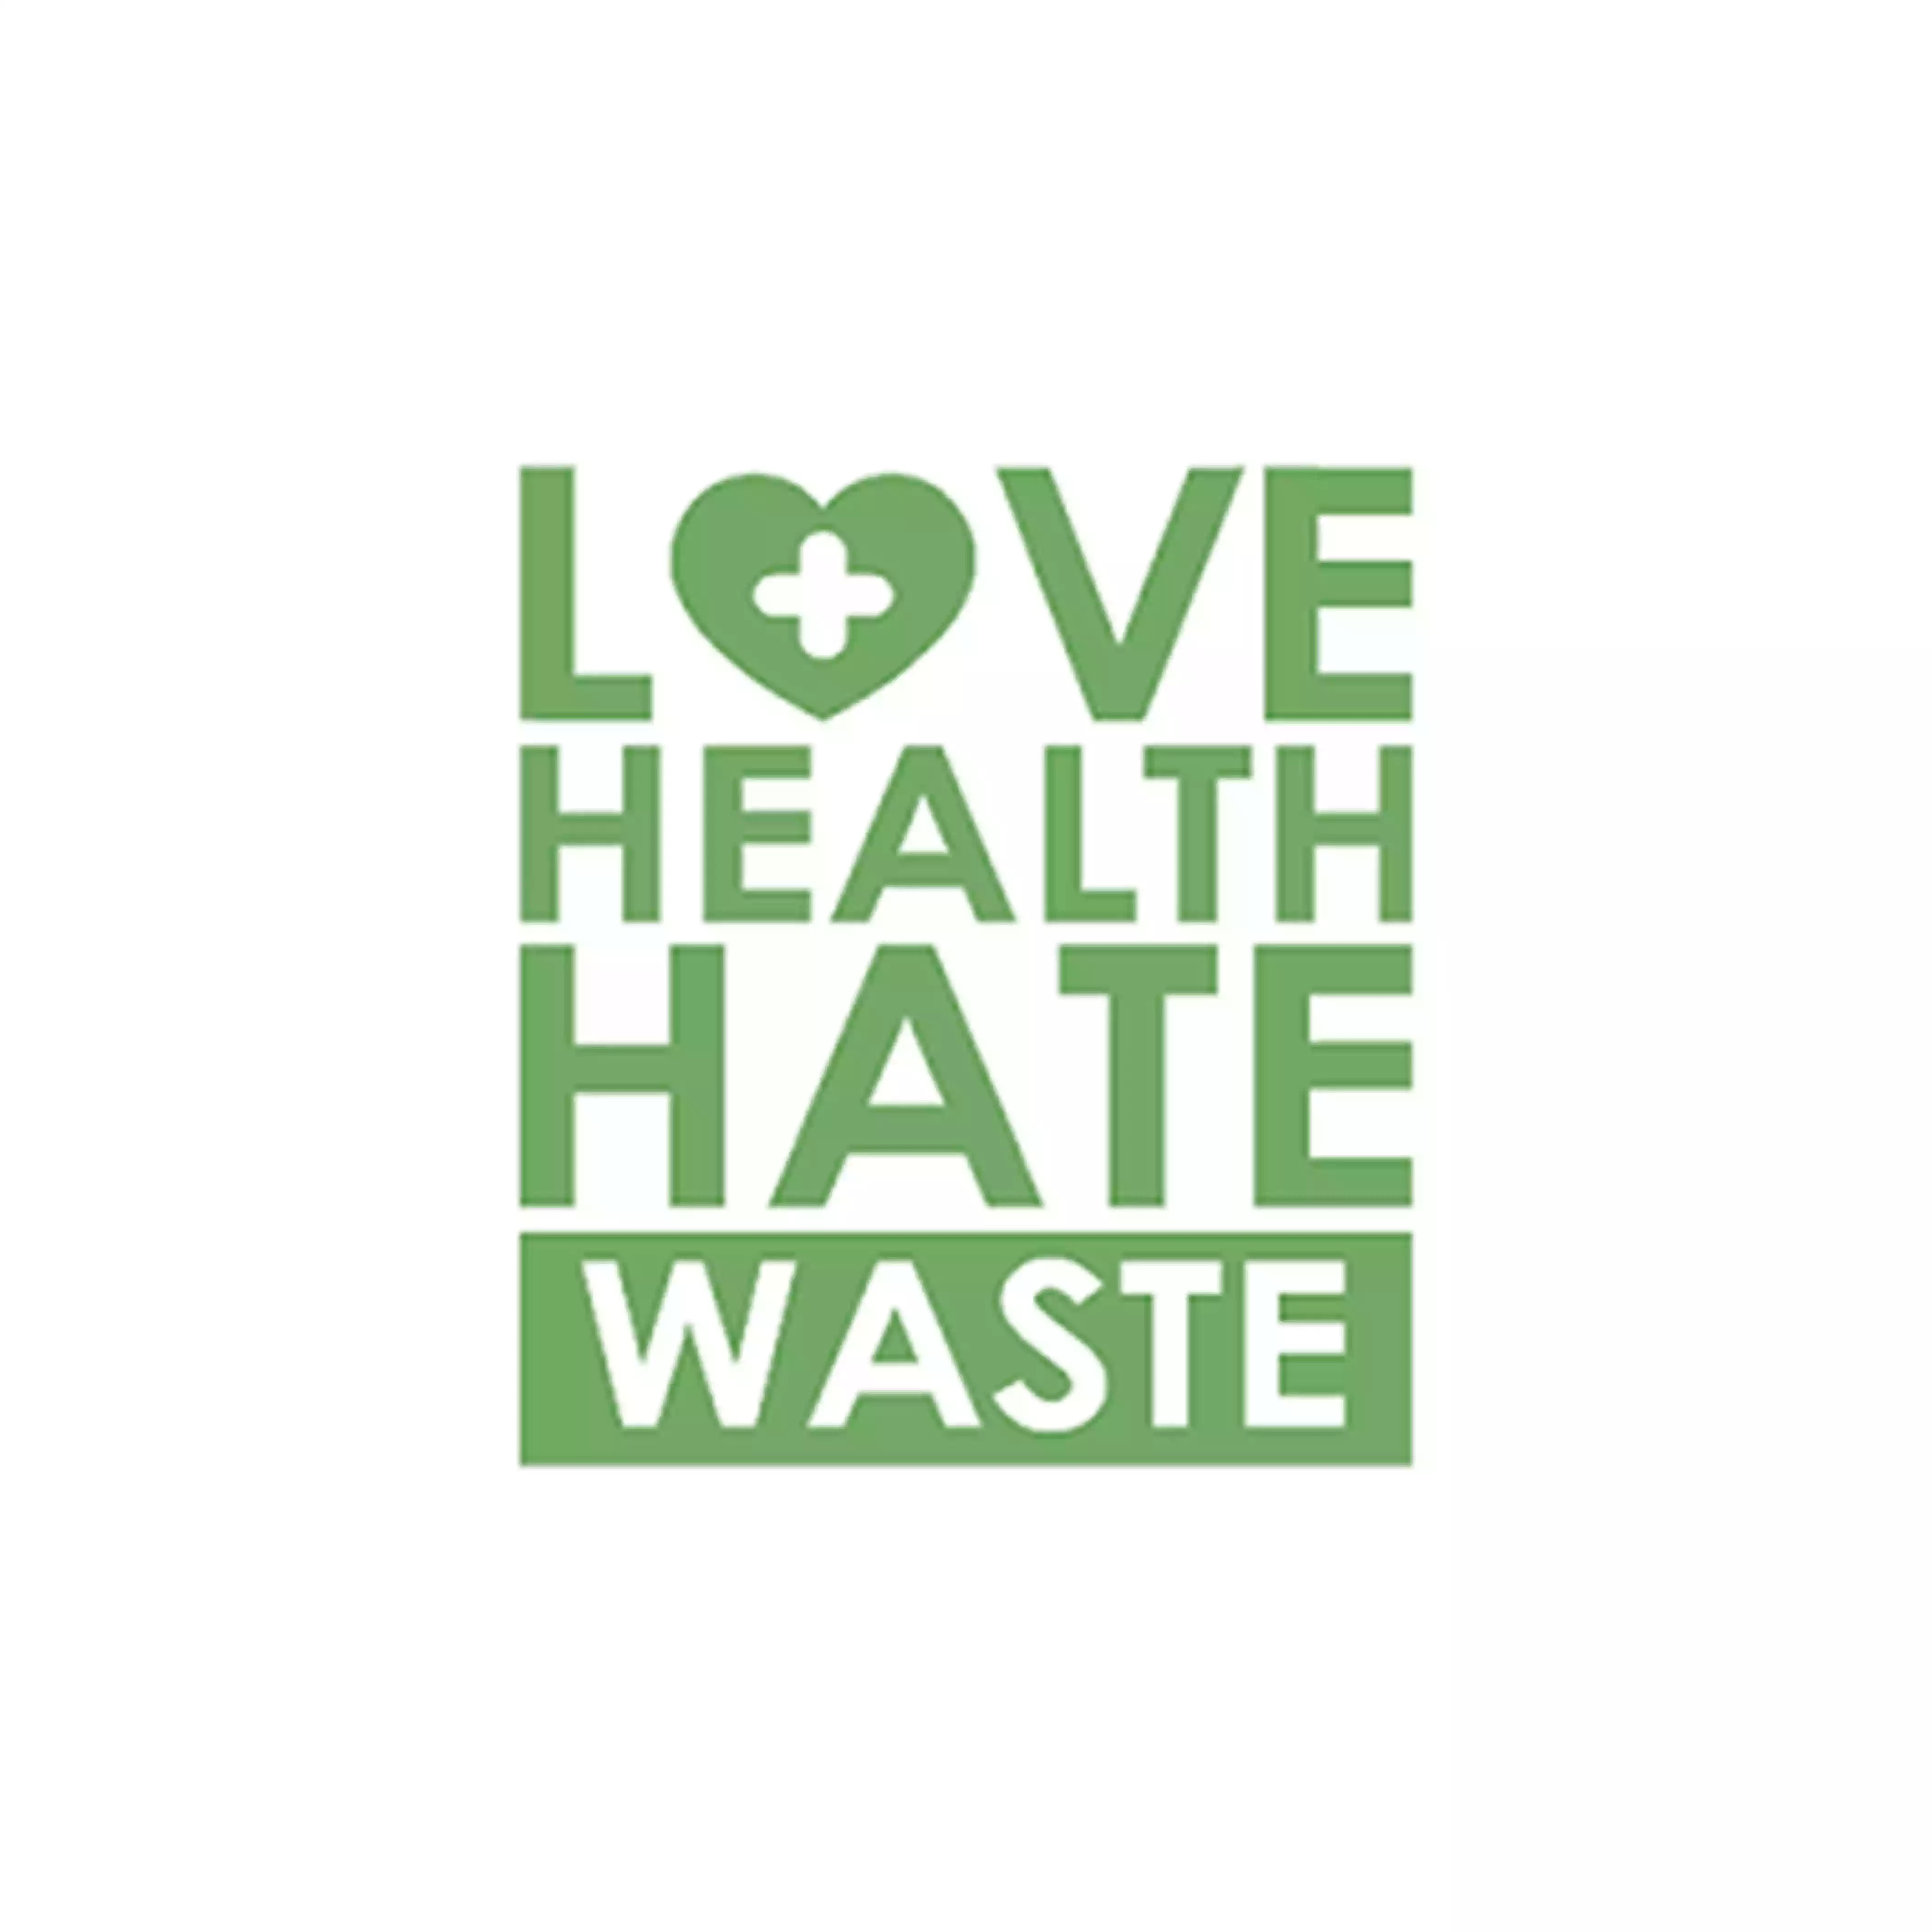 Love Health Hate Waste